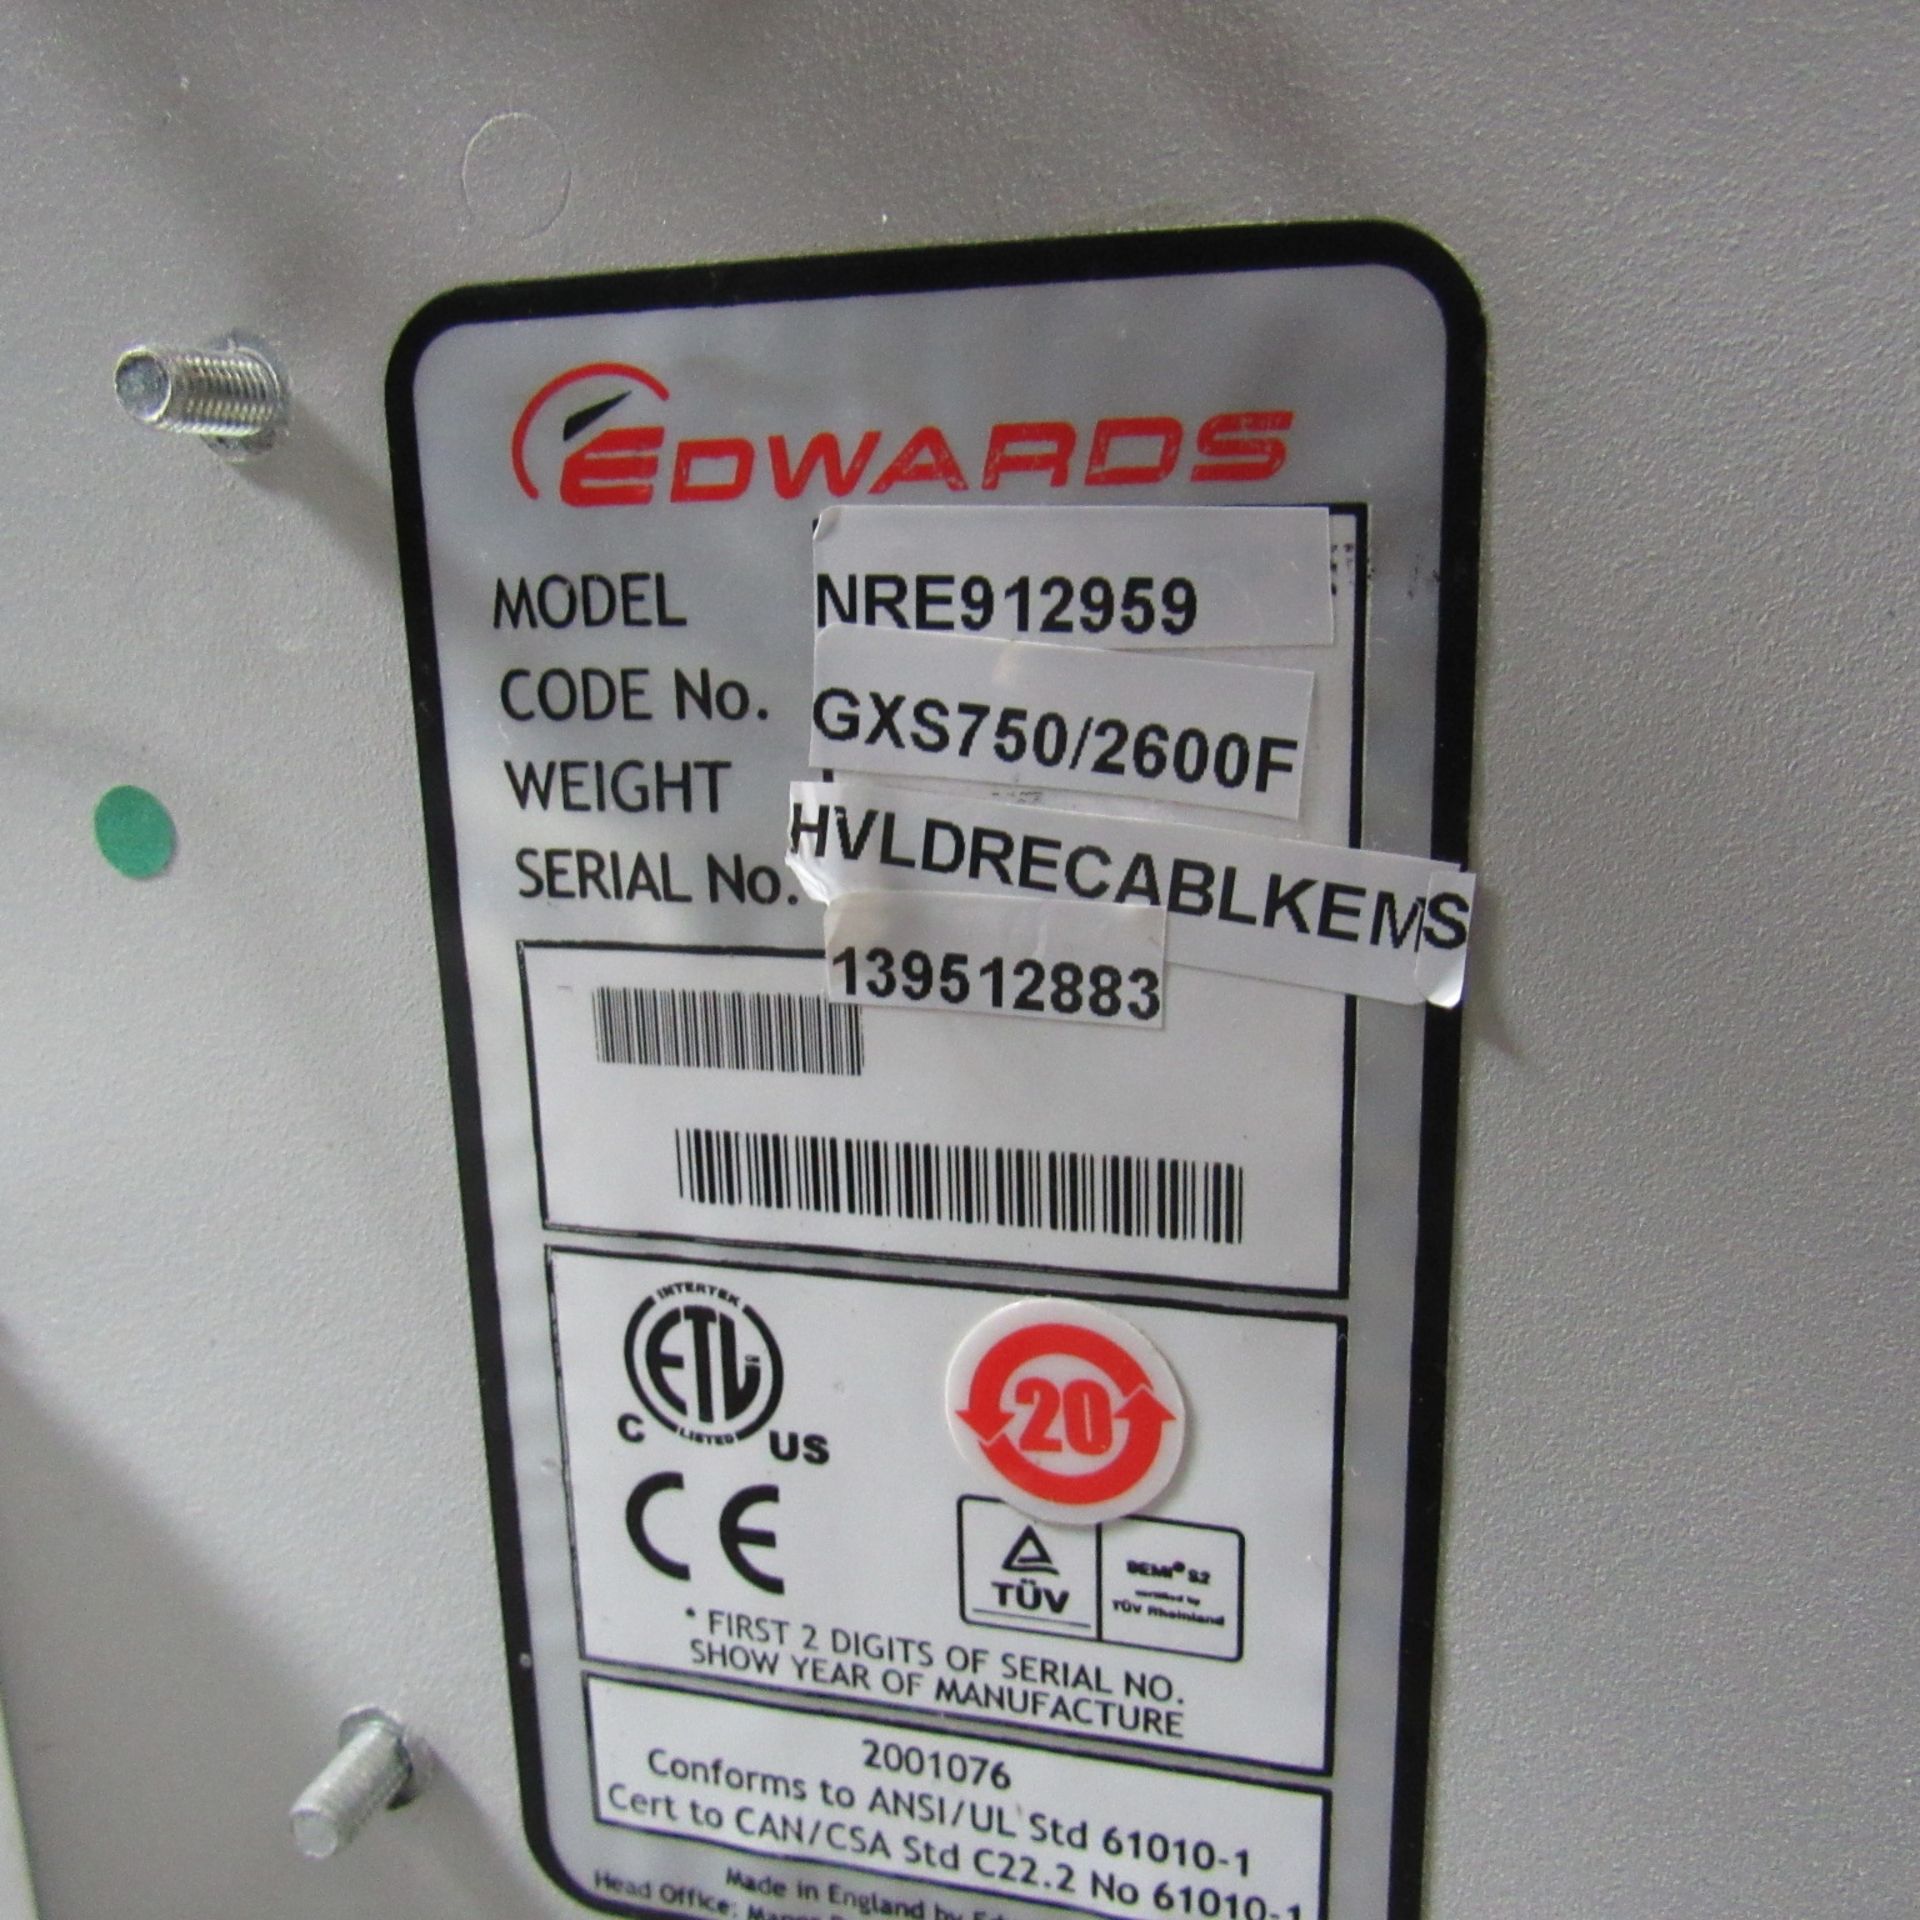 EDWARDS GSX 750 / 2600 HV LD DRY SCREW VACUUM PUMP - Image 4 of 4